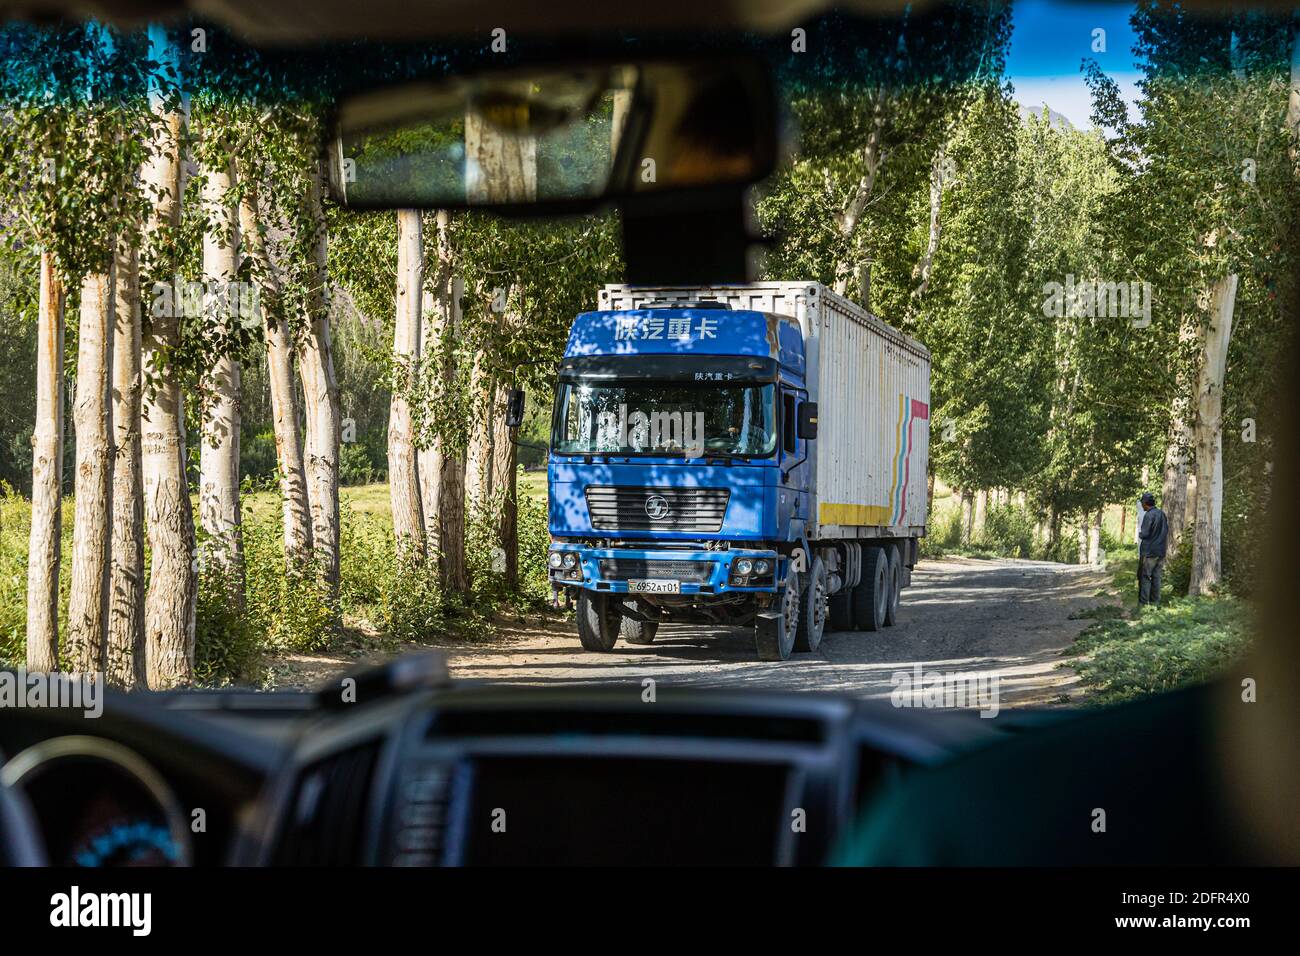 Chinese truck with Tajik license plate on the Silk Road in Boibar, Tajikistan Stock Photo